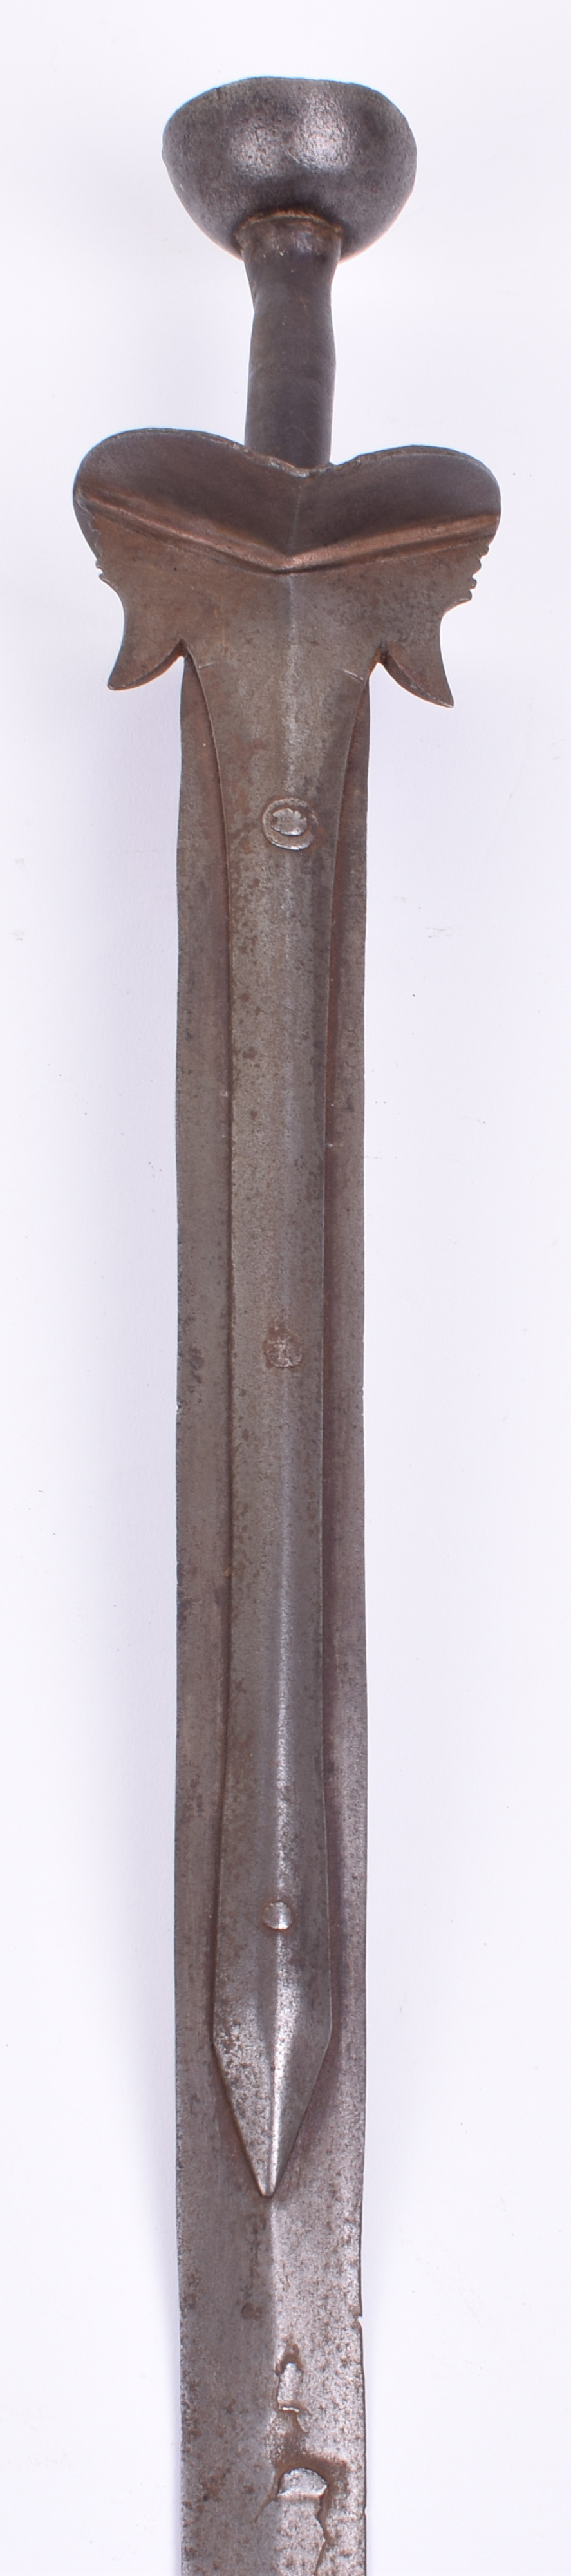 Early Indian Sword Khanda, 17th Century - Image 3 of 6